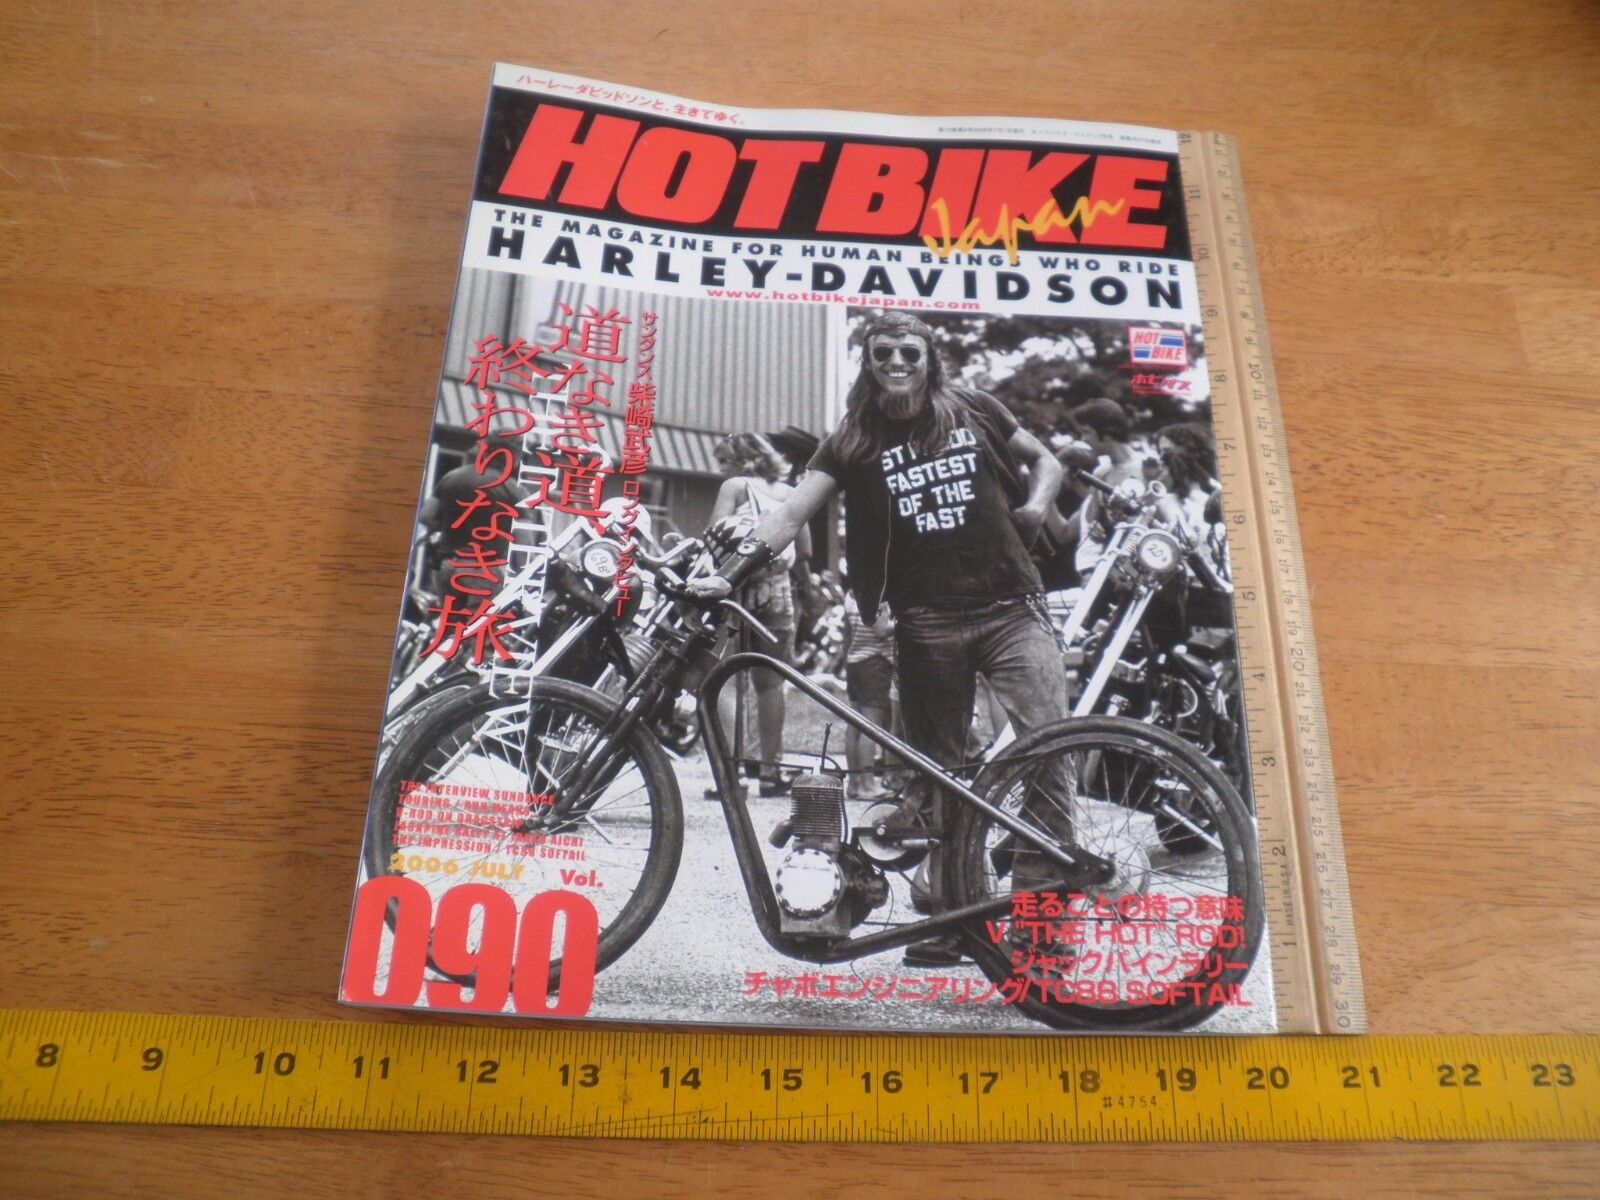 Hot Bike Japan 90 magazine for Human Beings who ride Harley-Davidson motorcycles